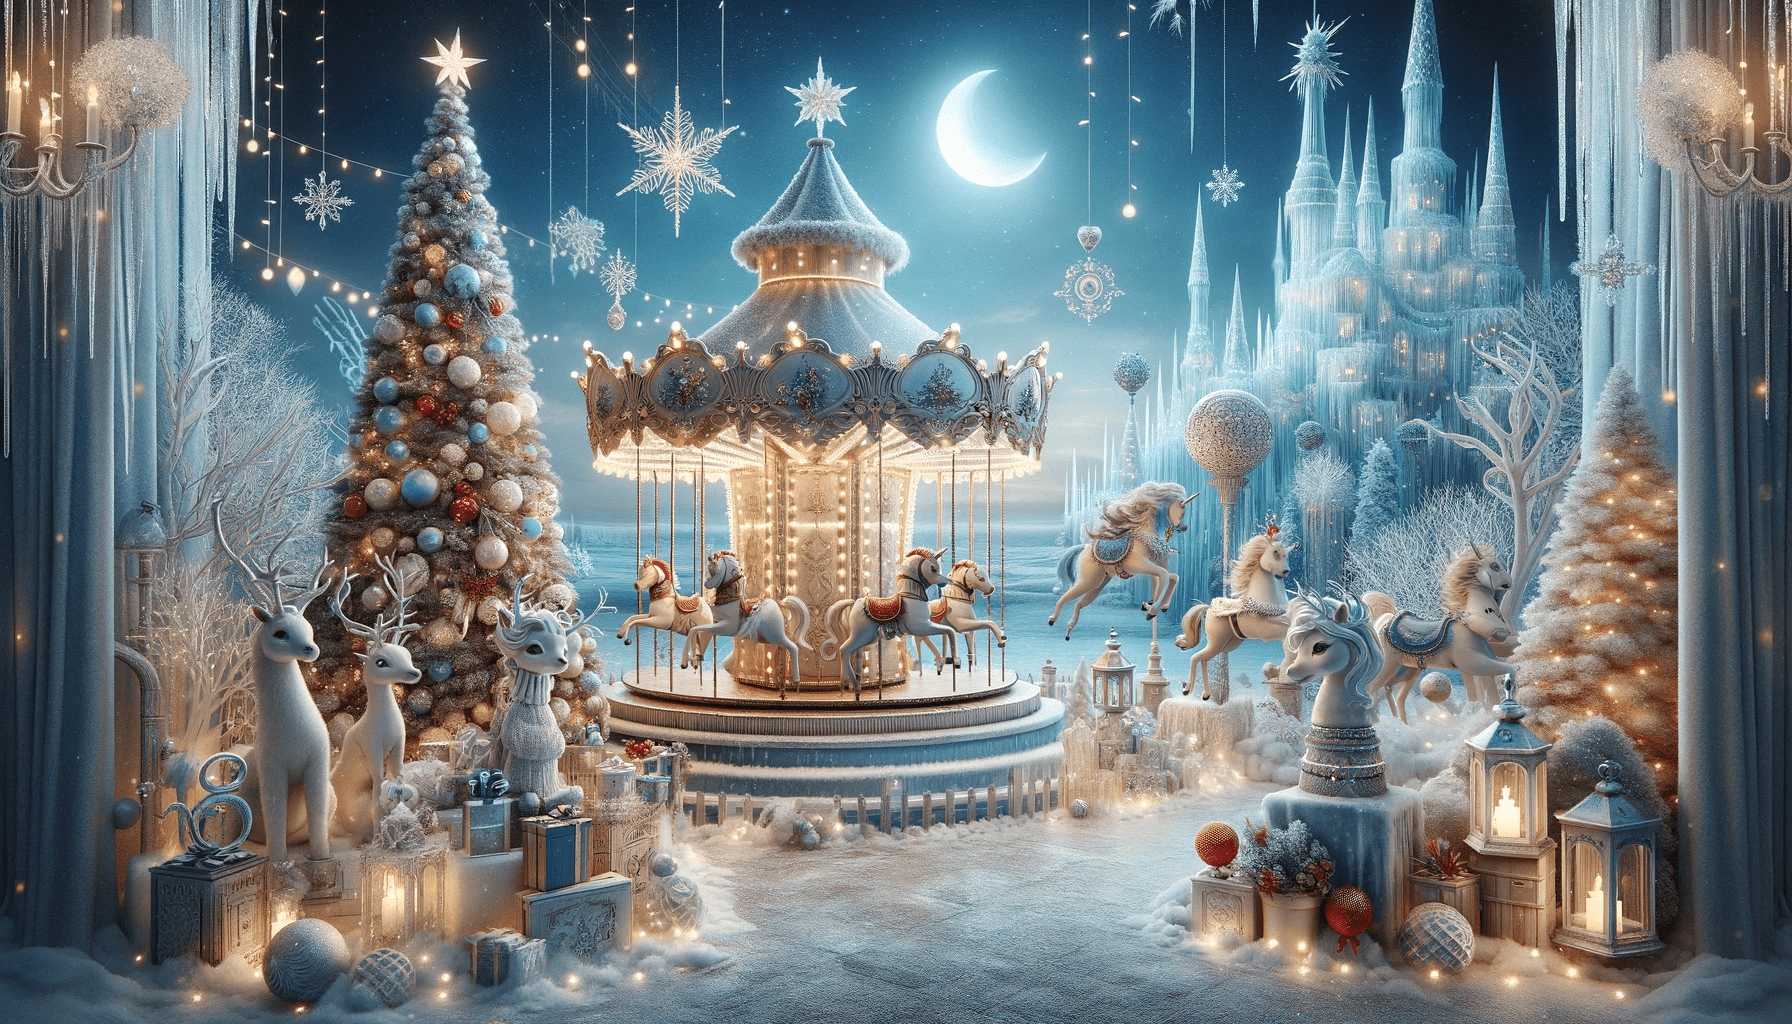 Magical ice castle Christmas backdrop